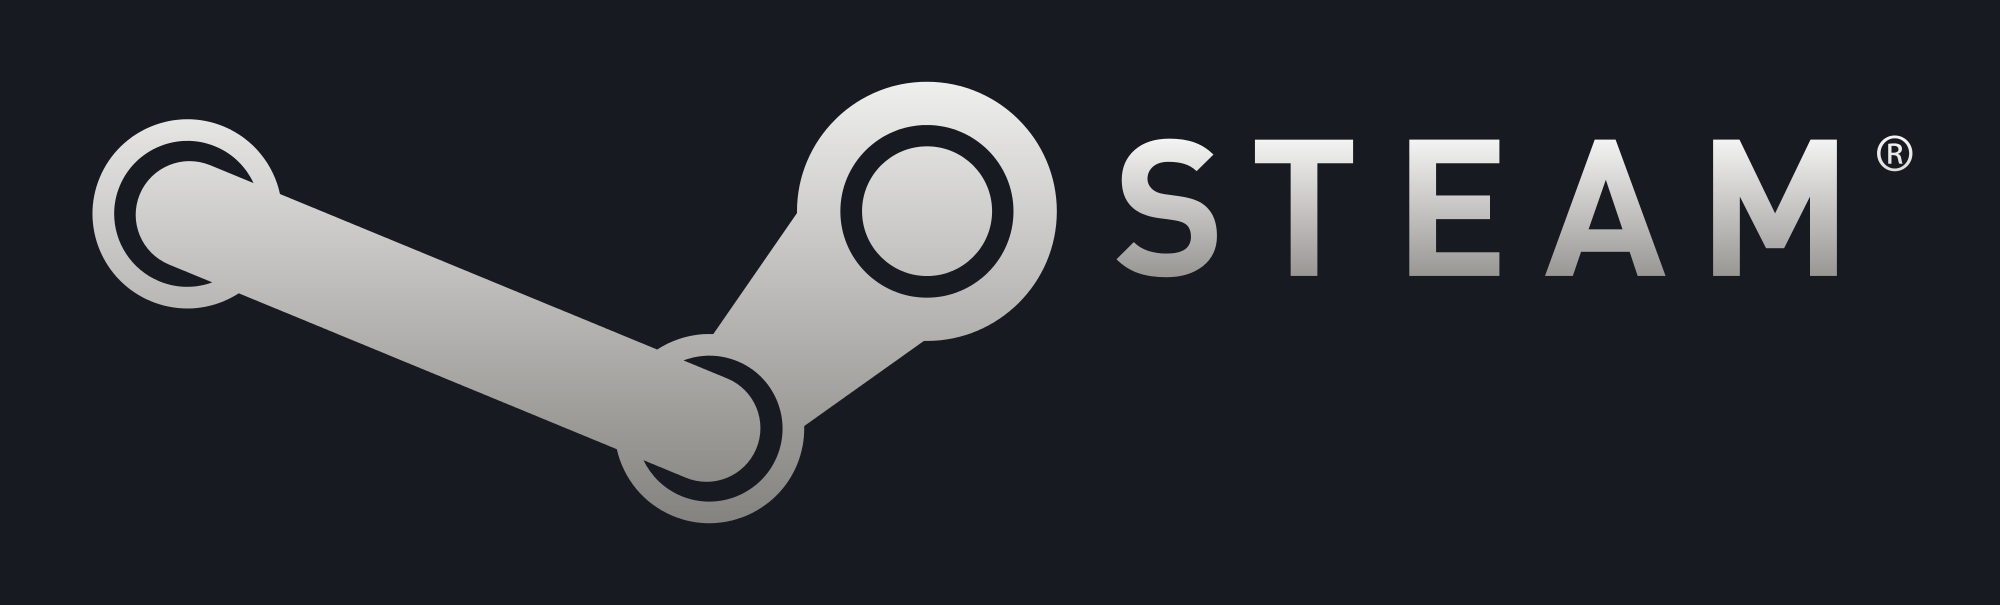 Steam Logo - File:Steam logo.svg - Wikimedia Commons